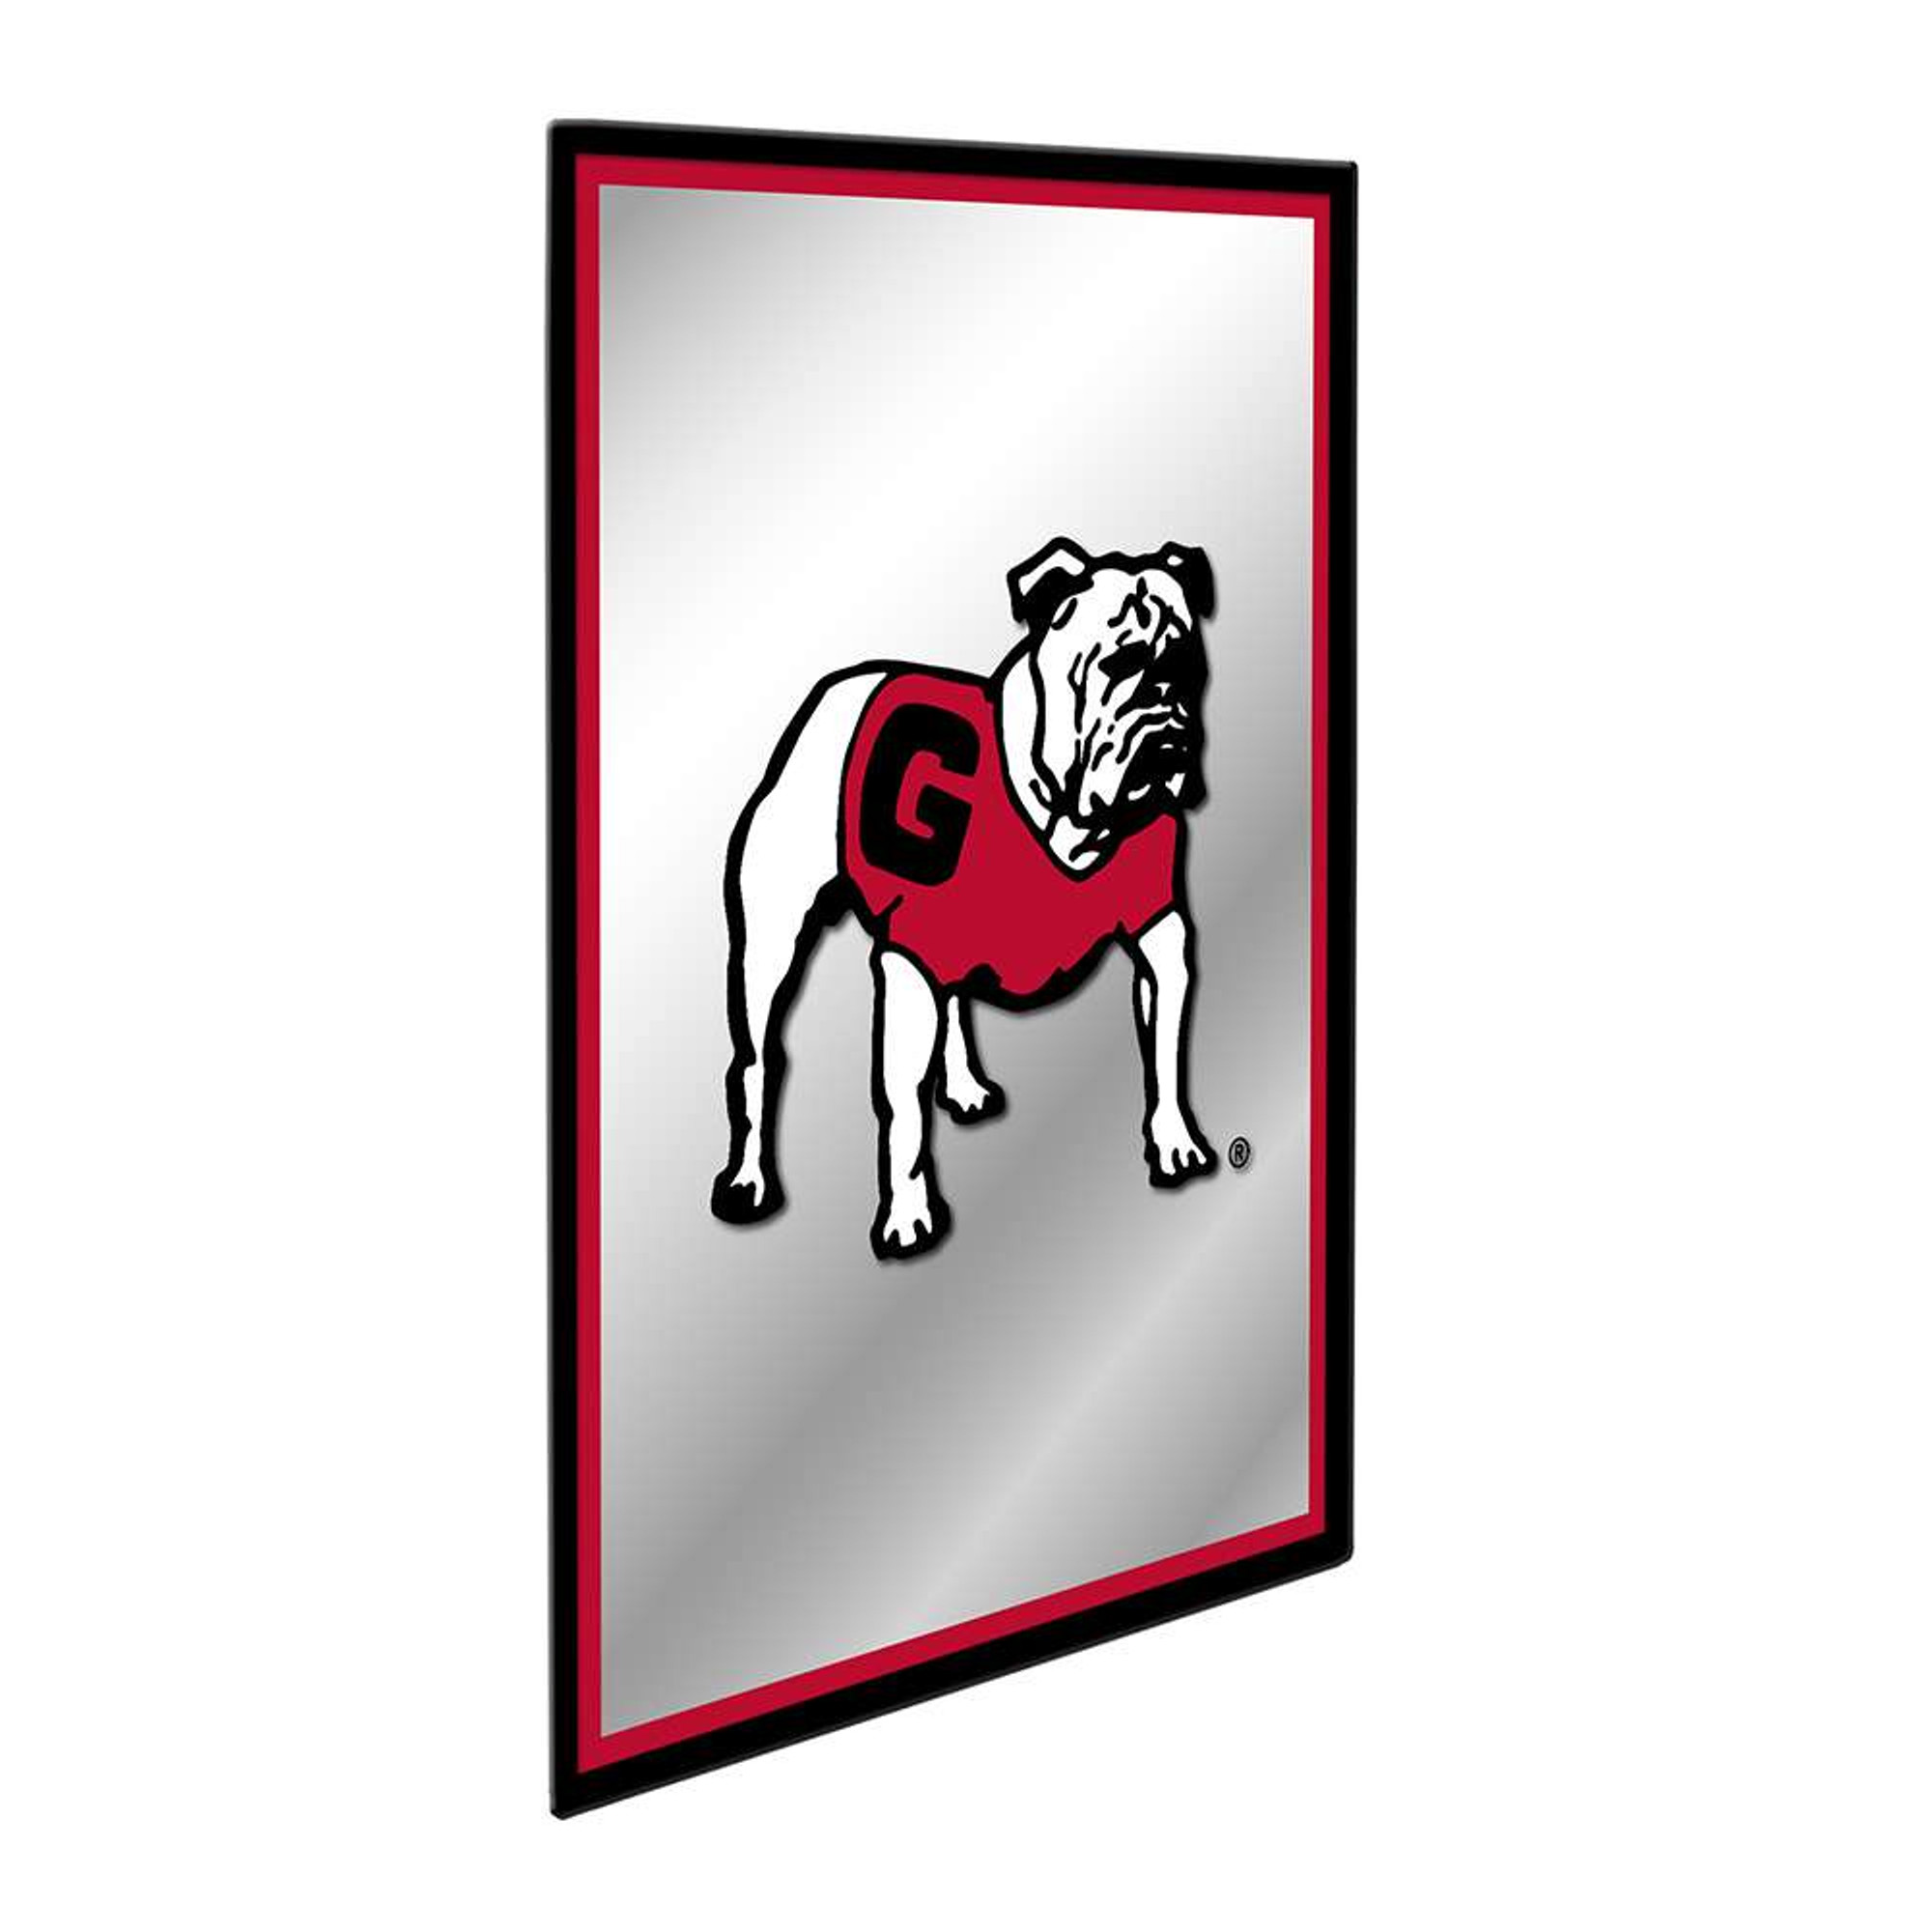 UGA Logo, red, logo, black, football, uga, bulldog, georgia, HD wallpaper